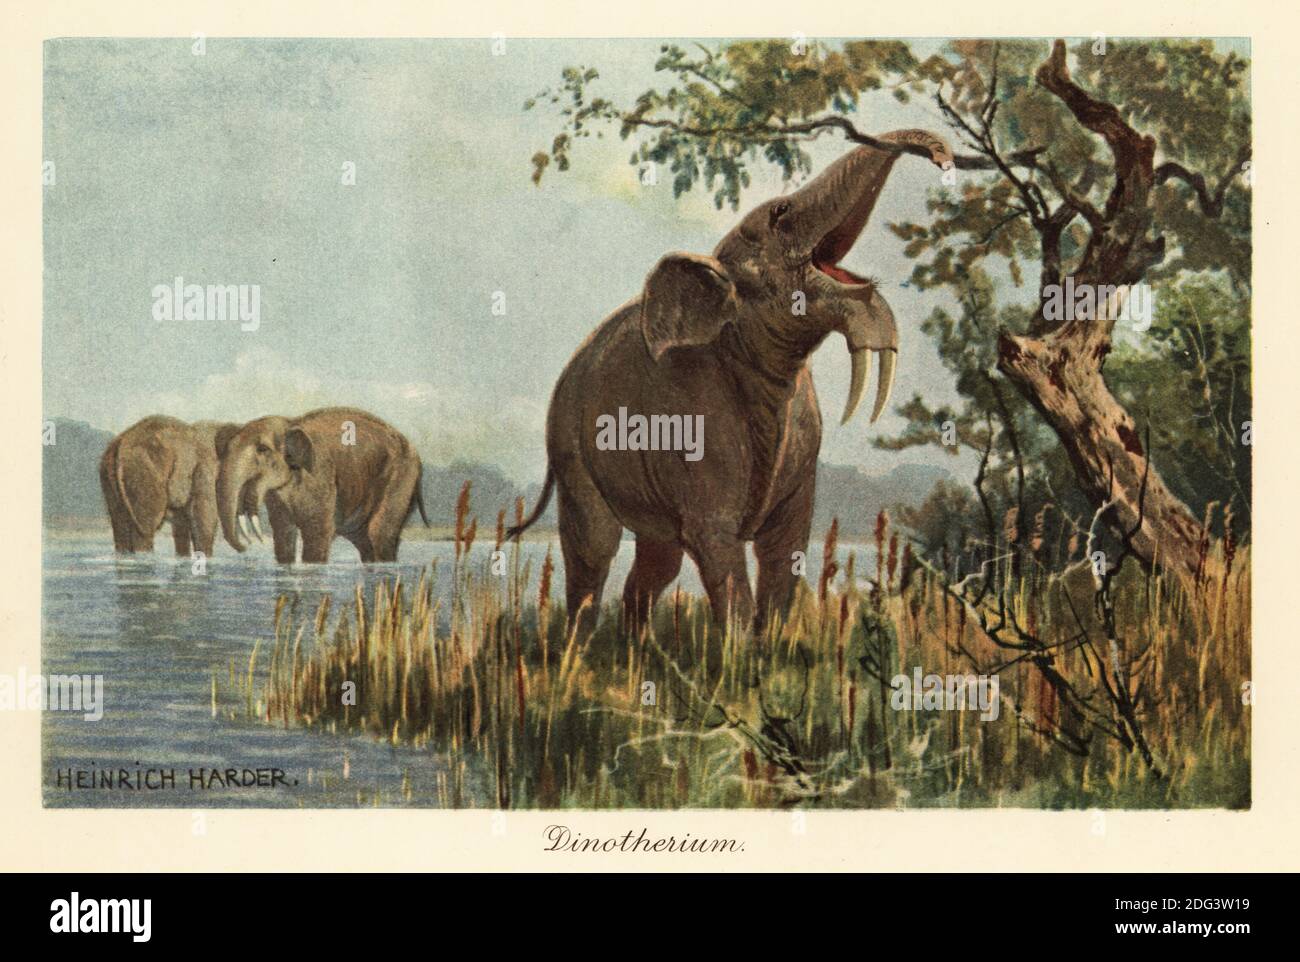 Deinotherium Giganteum Prehistoric Elephant Wood Engraving Published In  1893 Stock Illustration - Download Image Now - iStock